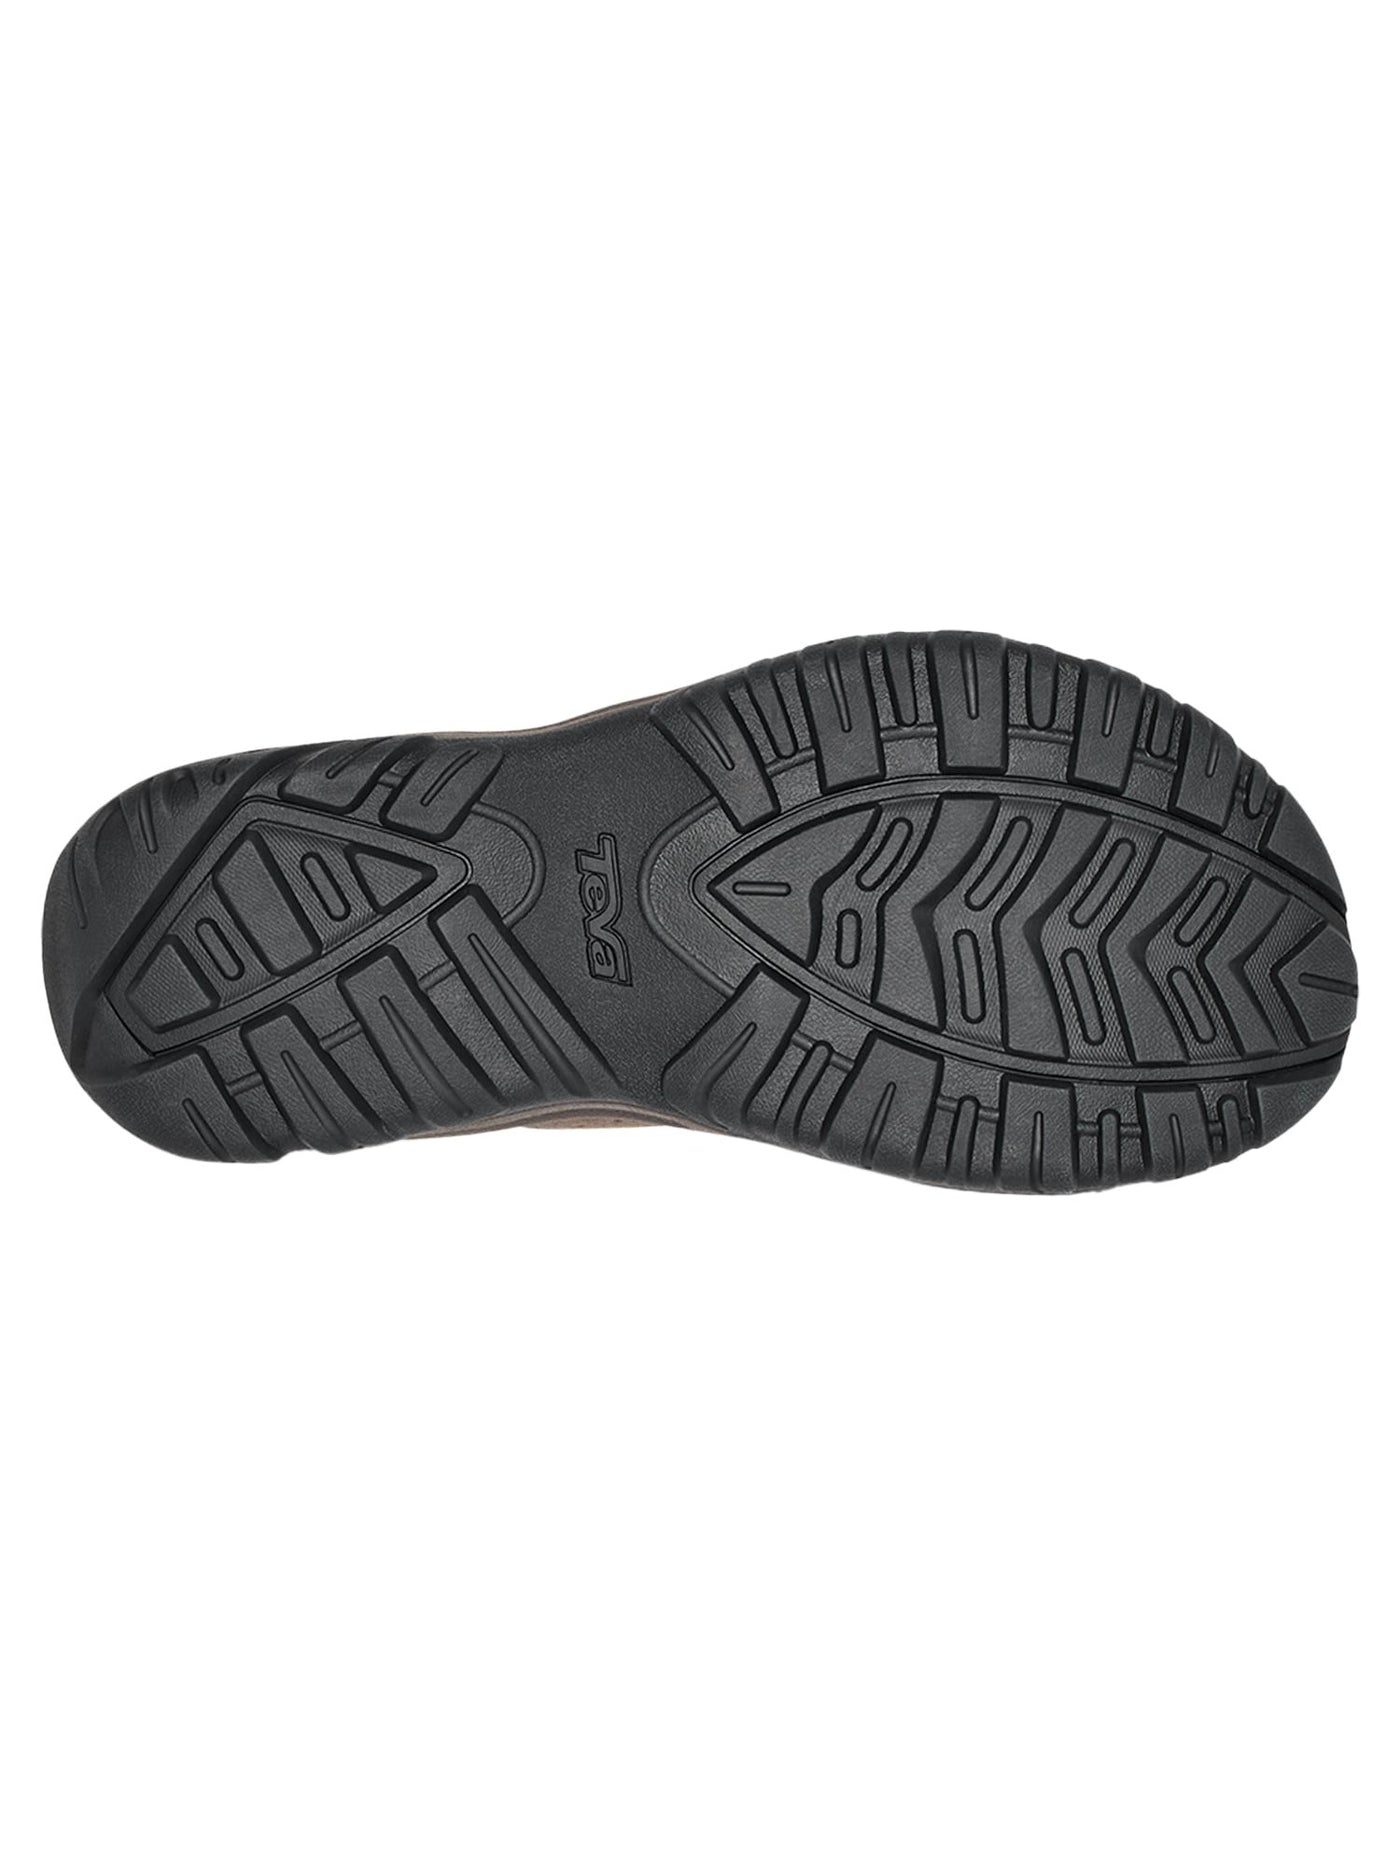 TEVA Mens Beige Color Block Mixed Media Traction Padded Water Resistant Katavi 2 Open Toe Slip On Leather Slide Sandals Shoes